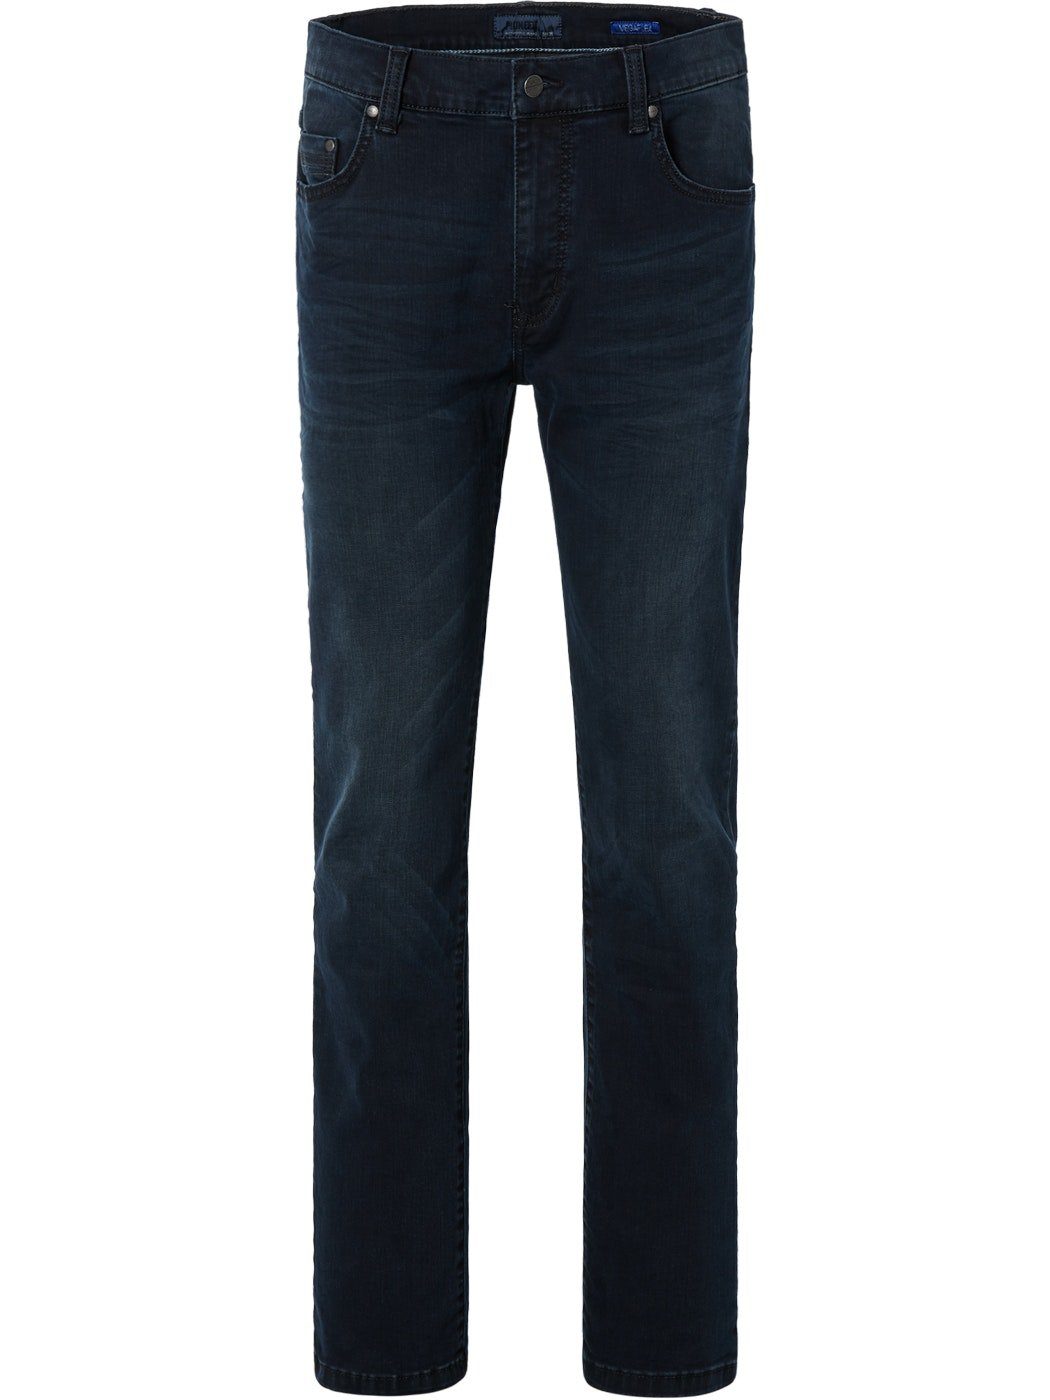 Pioneer Authentic Jeans 5-Pocket-Jeans PIONEER RANDO MEGAFLEX dark used 1674 9761.440 - AUTHENTIC